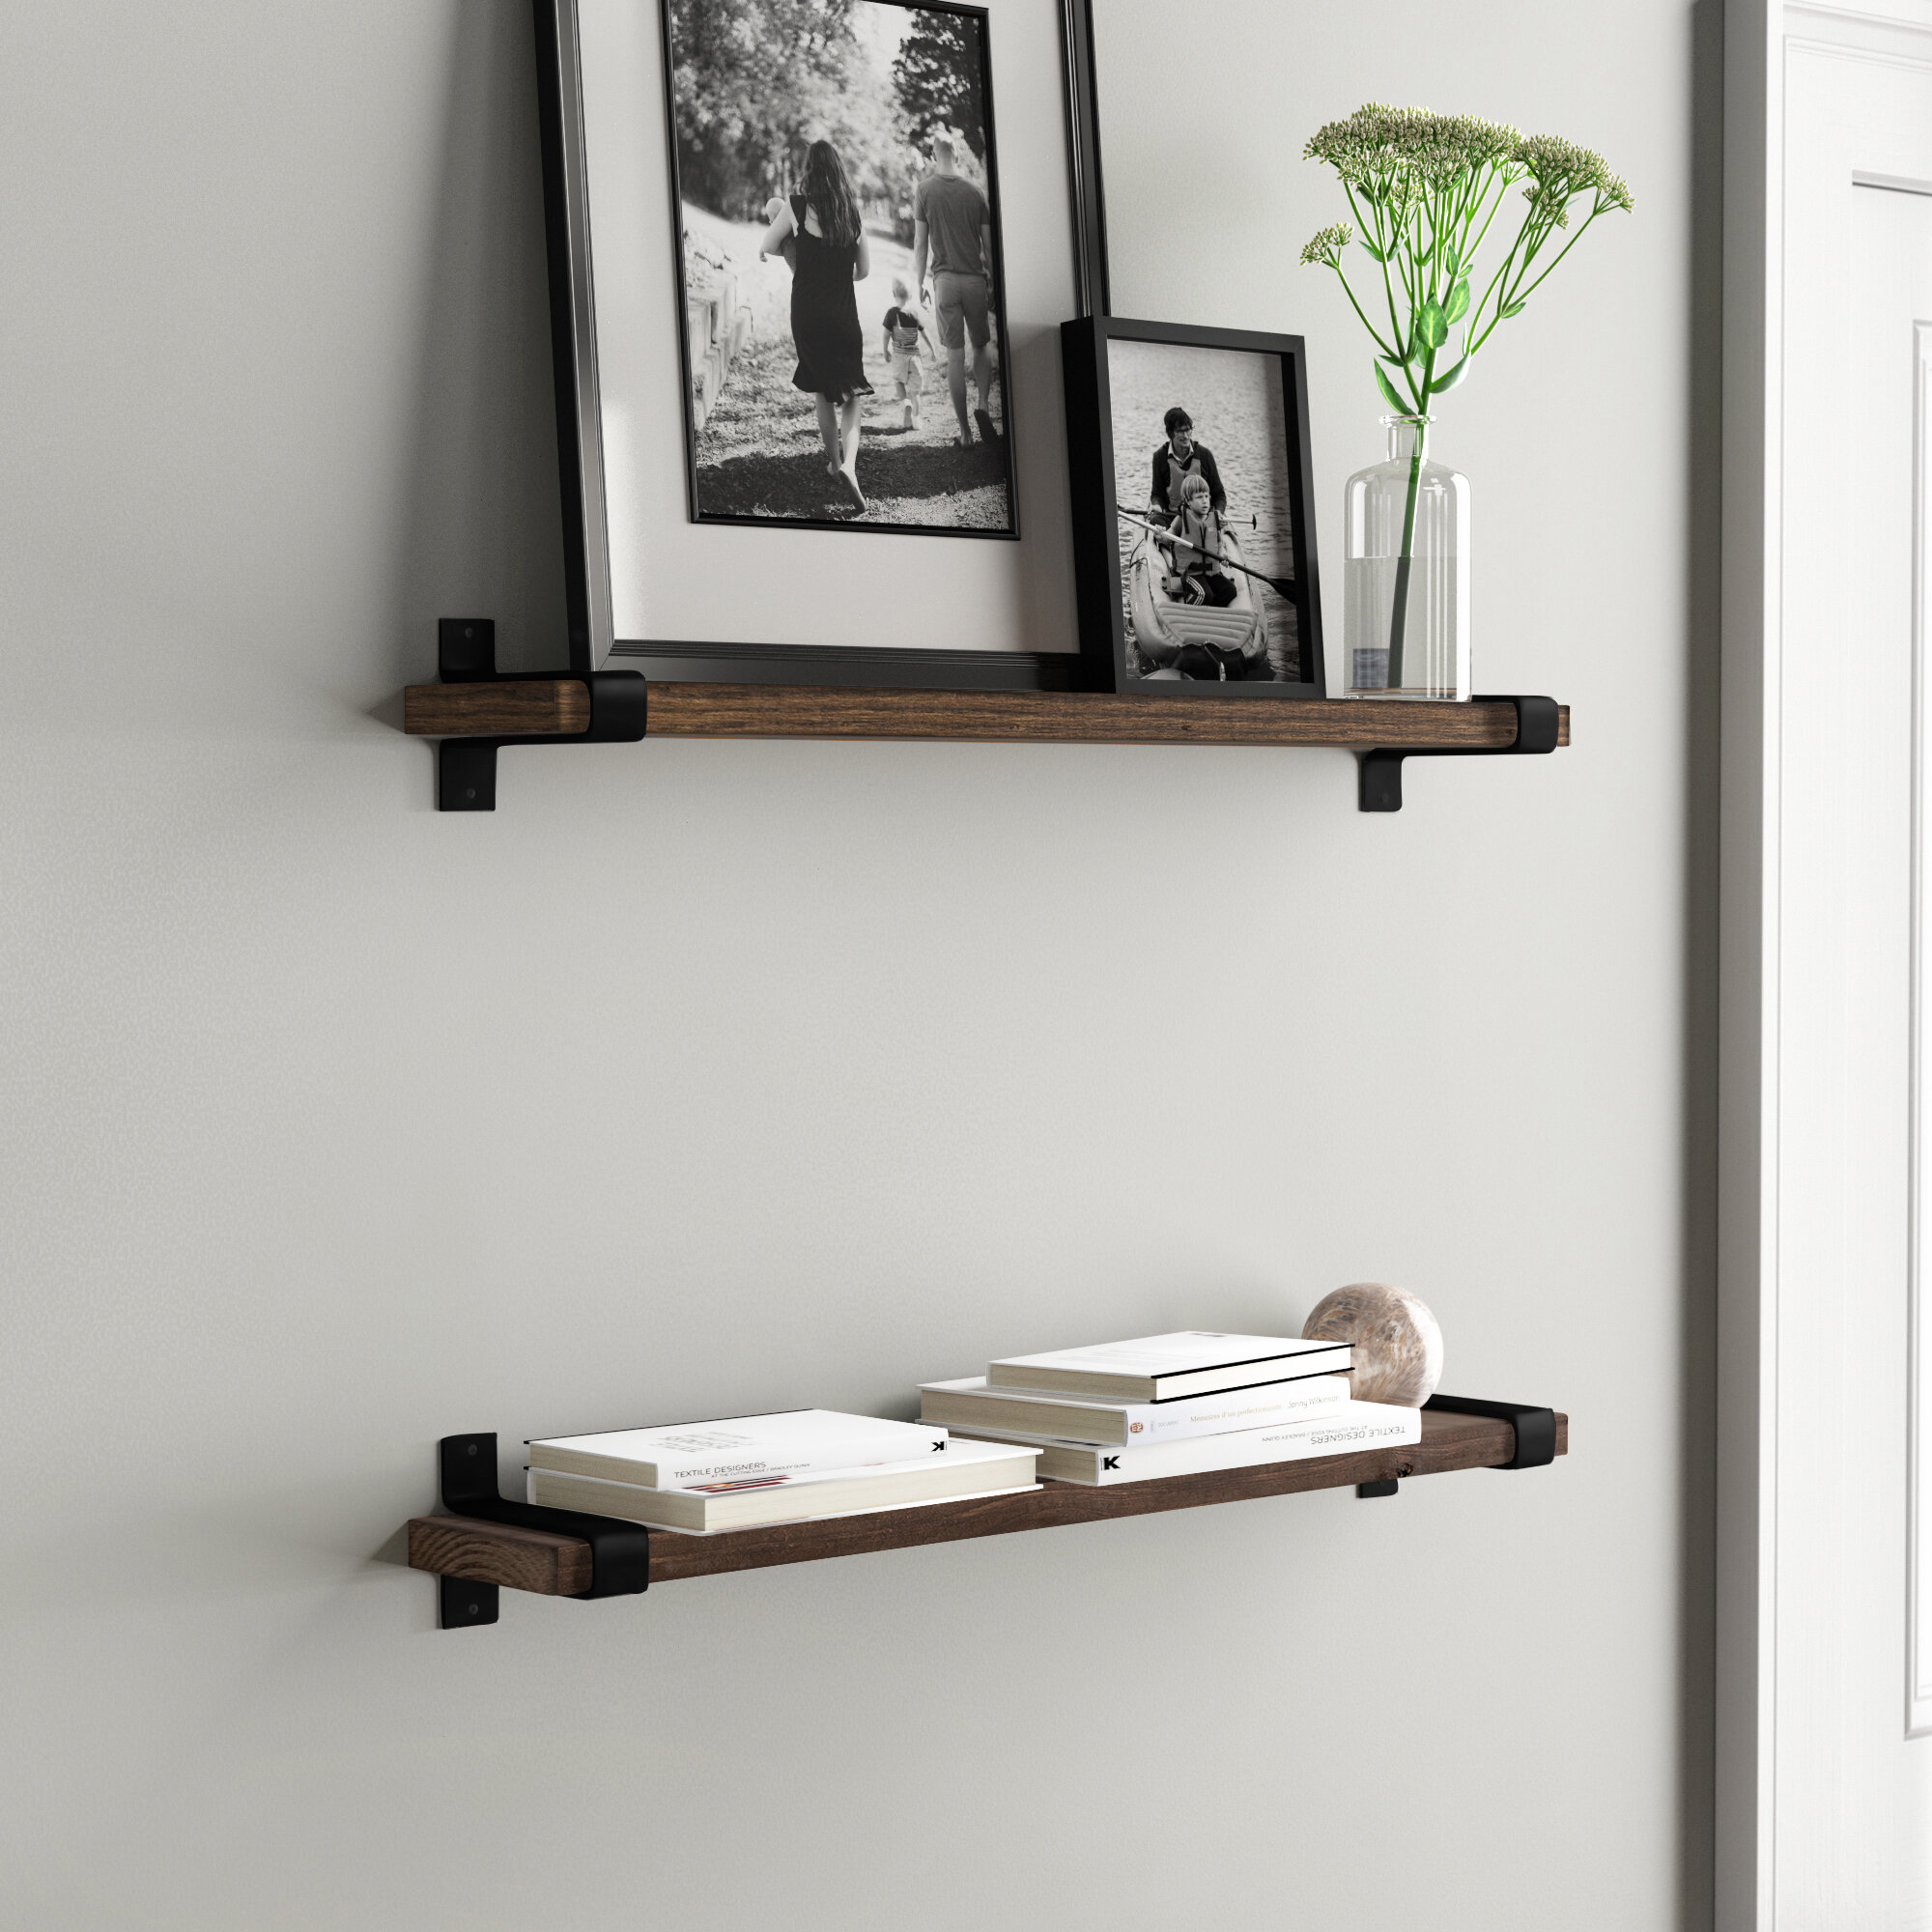 NEARPOW Floating Shelves Set of 2, Rustic Pine Wood Wall Shelf for